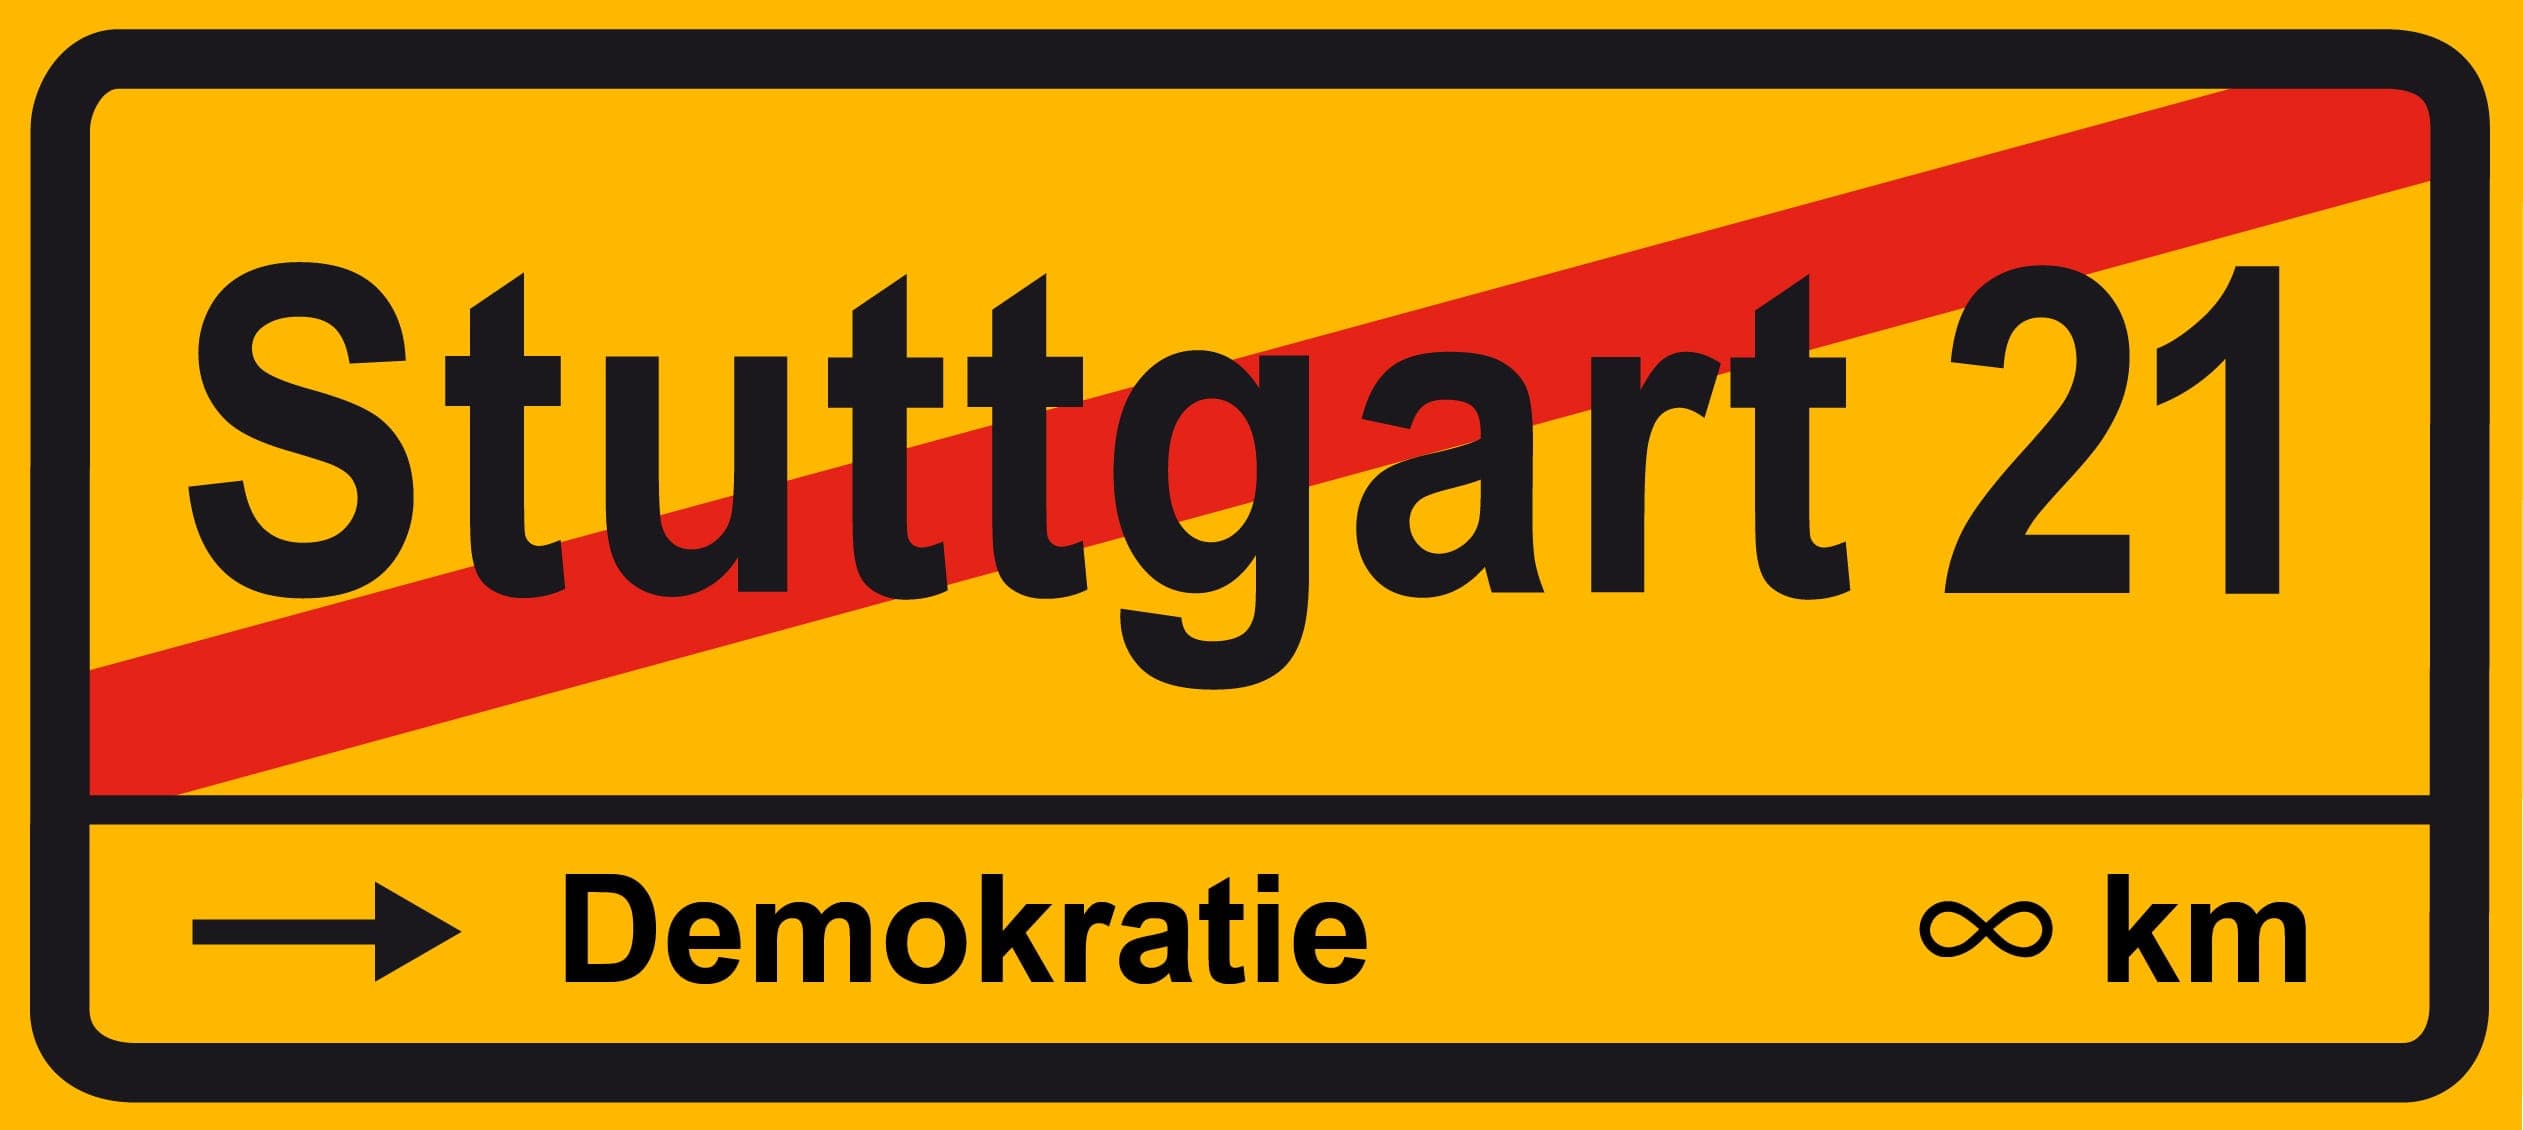 Stuttgart_21_Ende_Demokratie